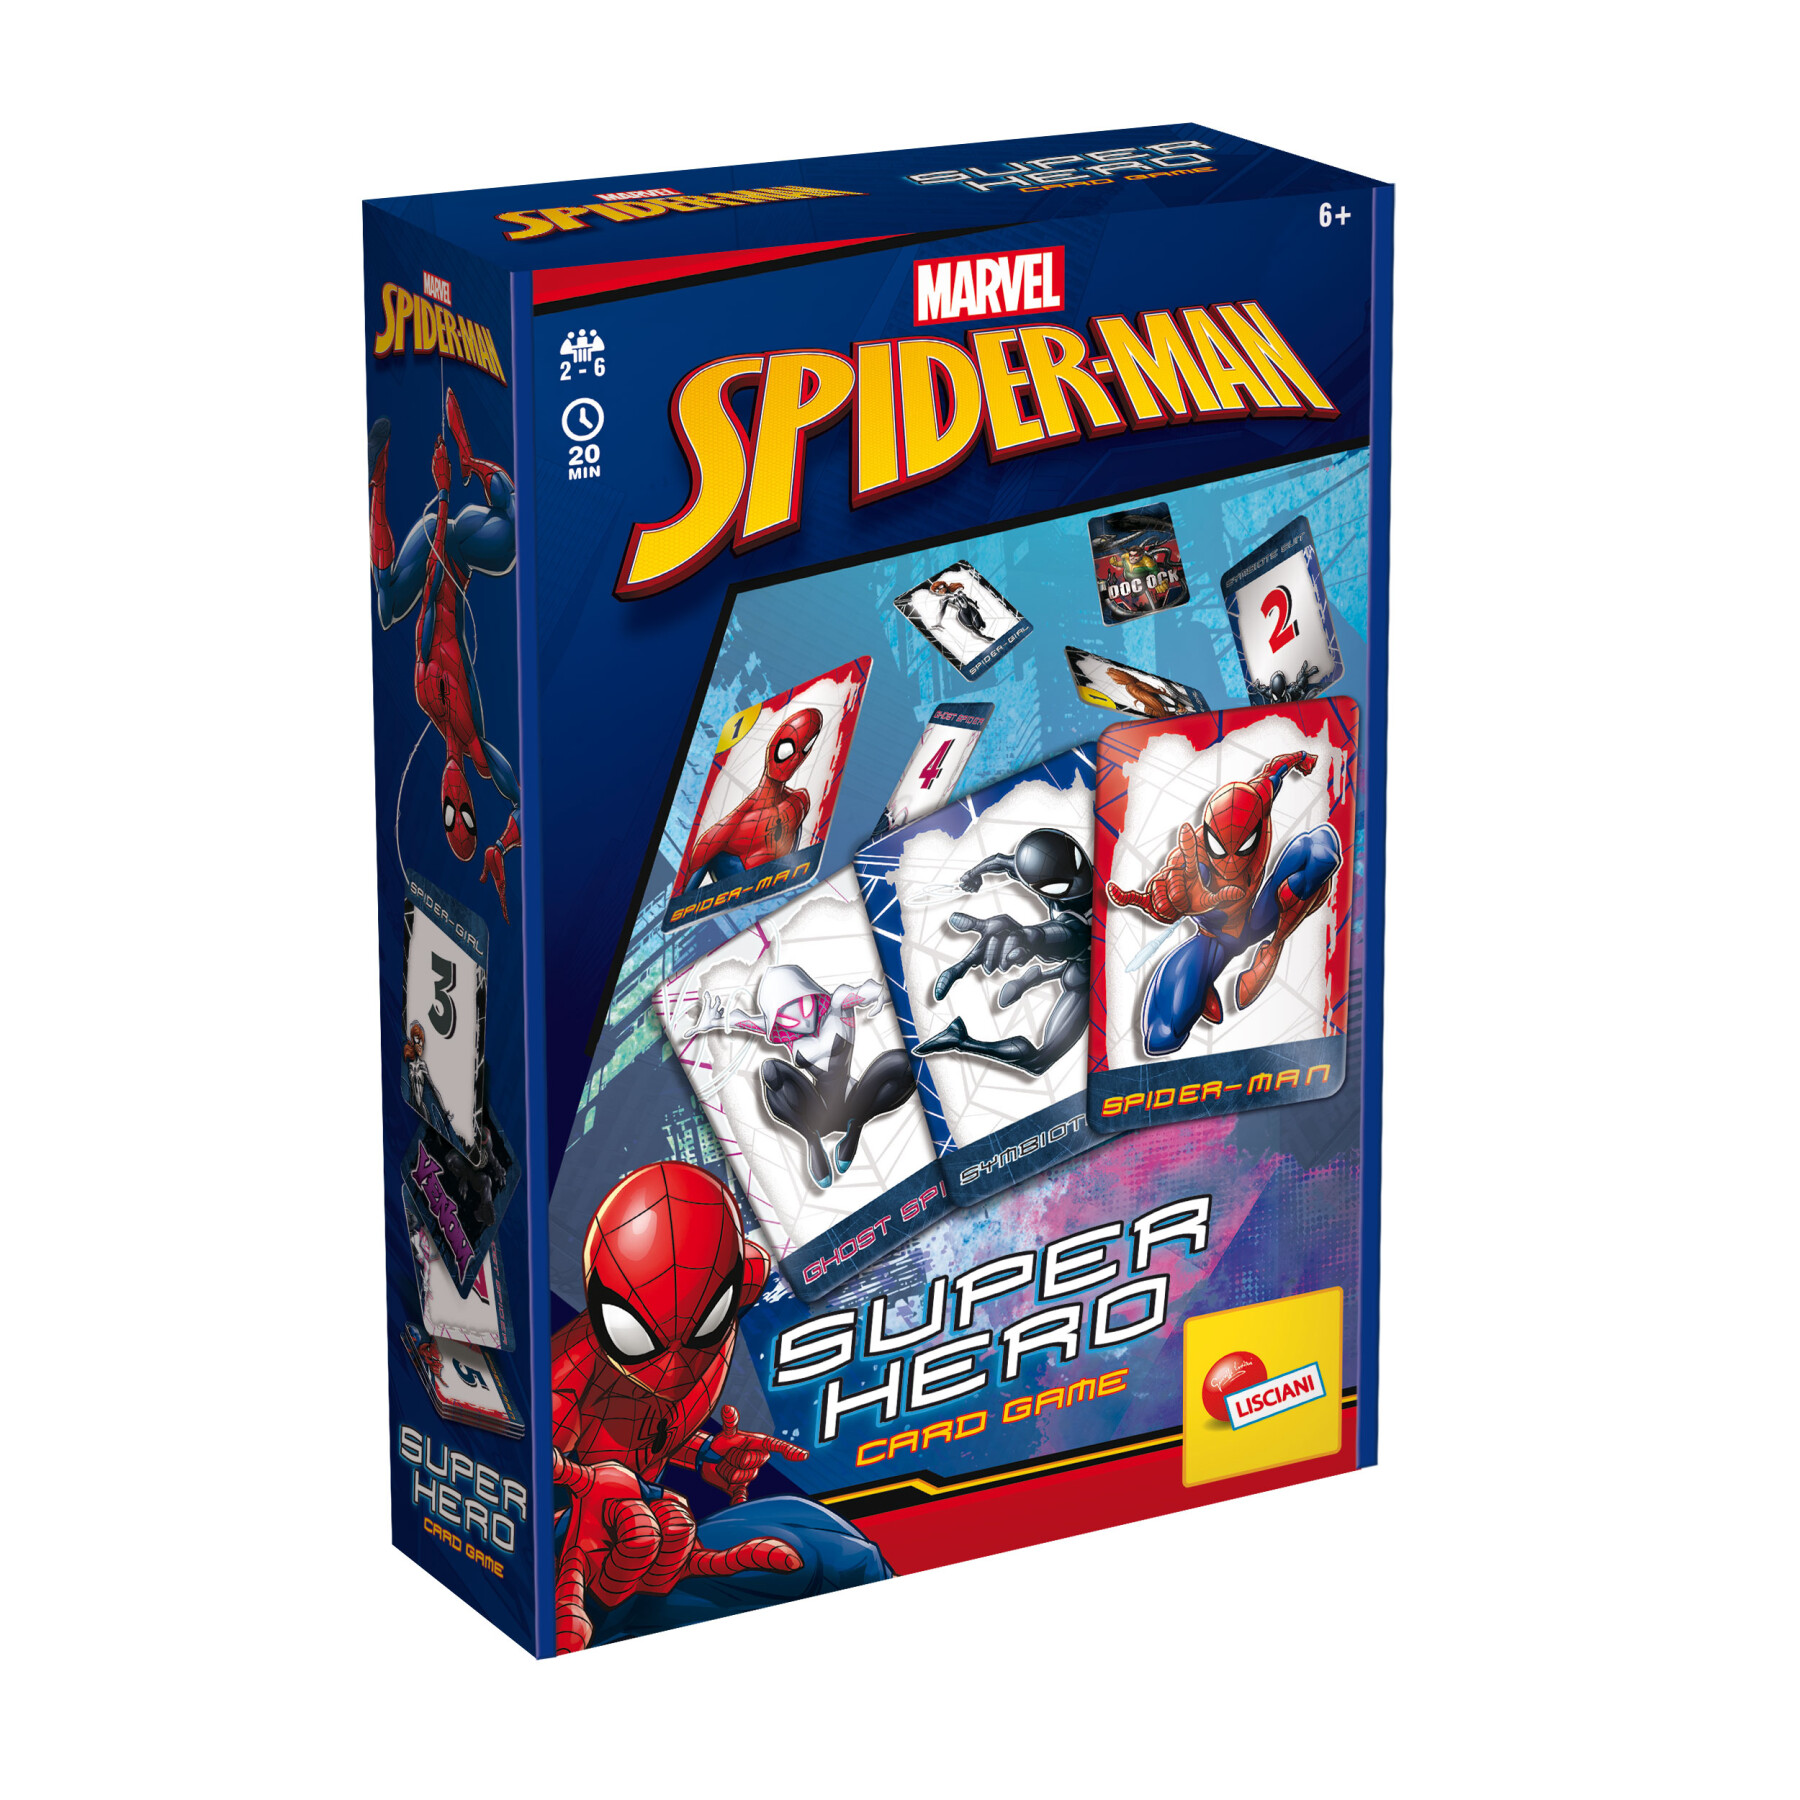 Spider-man super hero card game - LISCIANI, Avengers, Spiderman